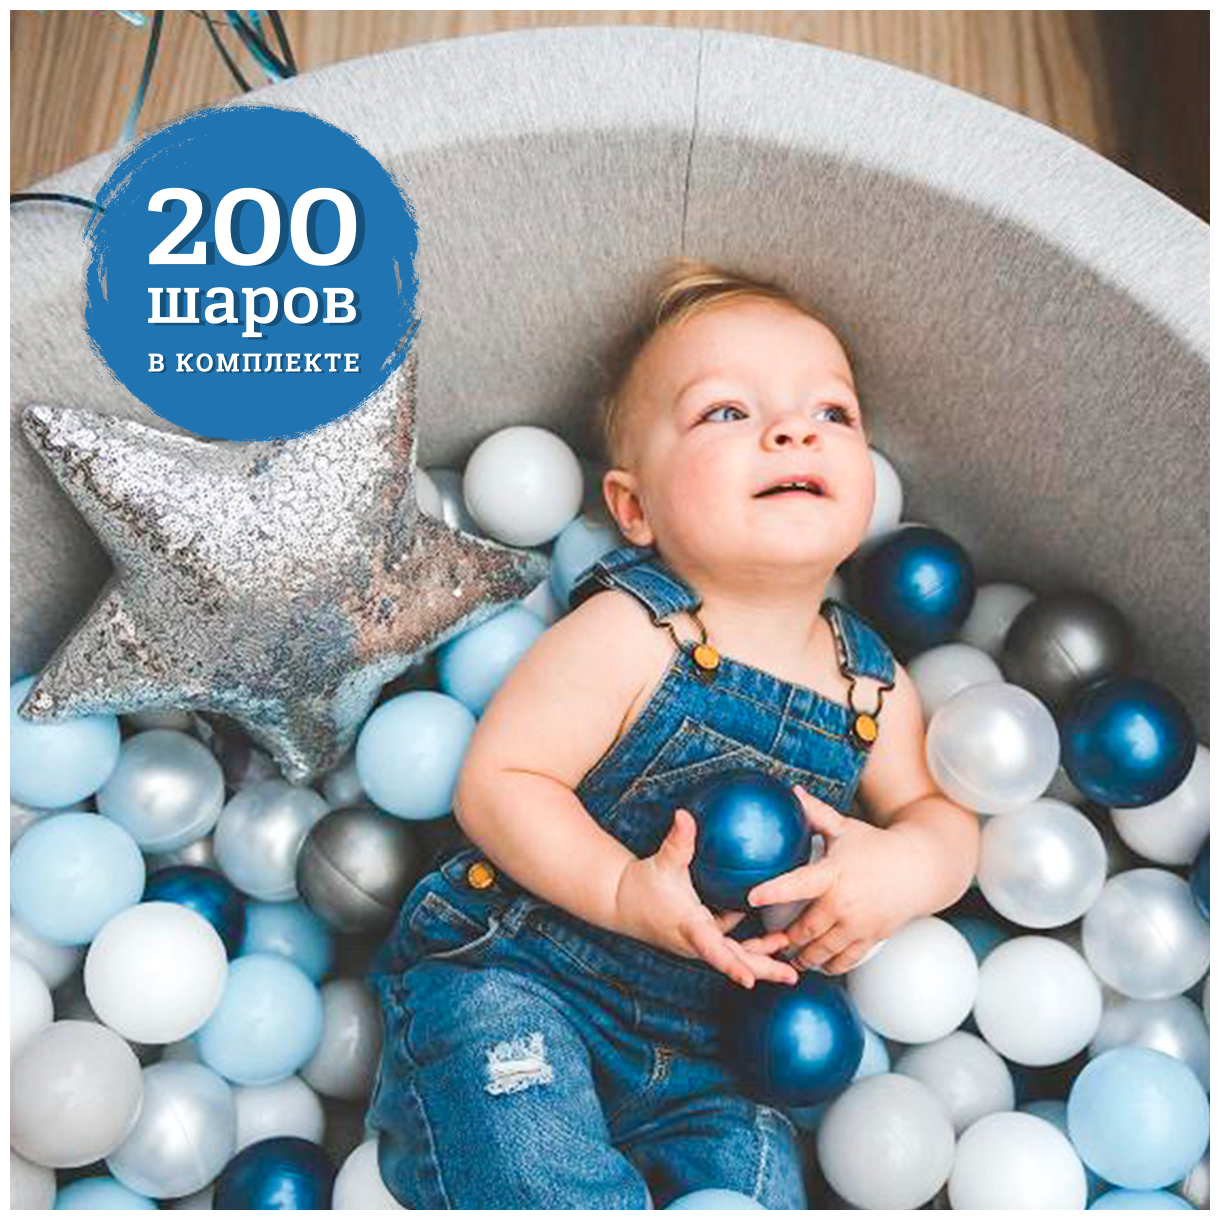 Anlipool №302, 100/40см + 200 шаров - в комплекте: шарики